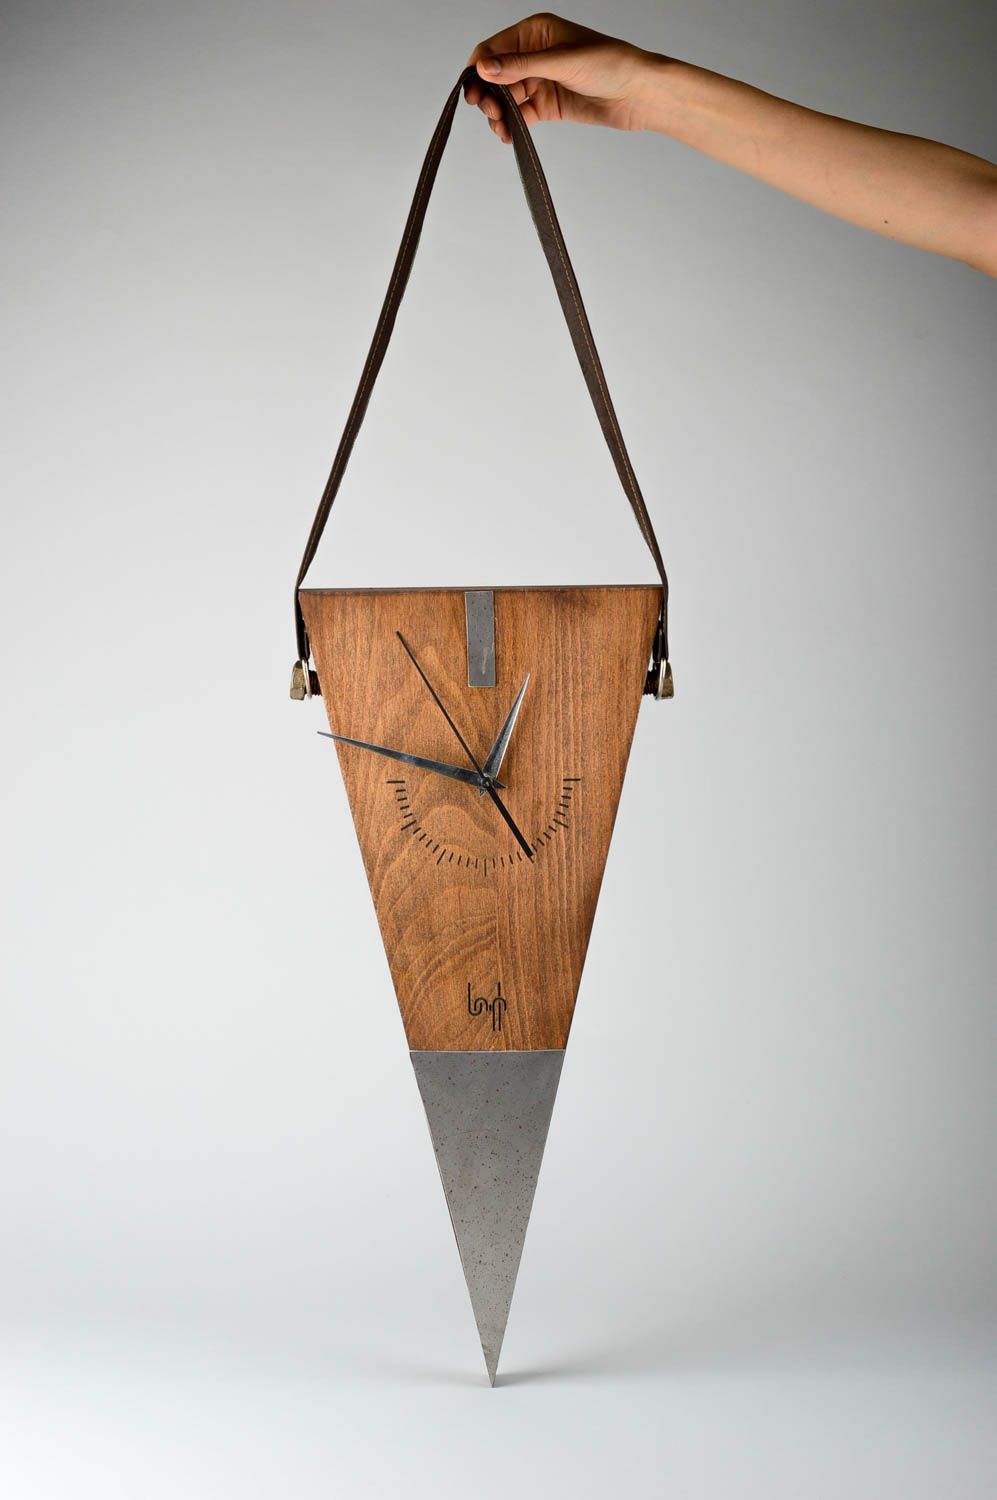 Wooden wall clock homemade home decor designer wall clock housewarming gift idea photo 1